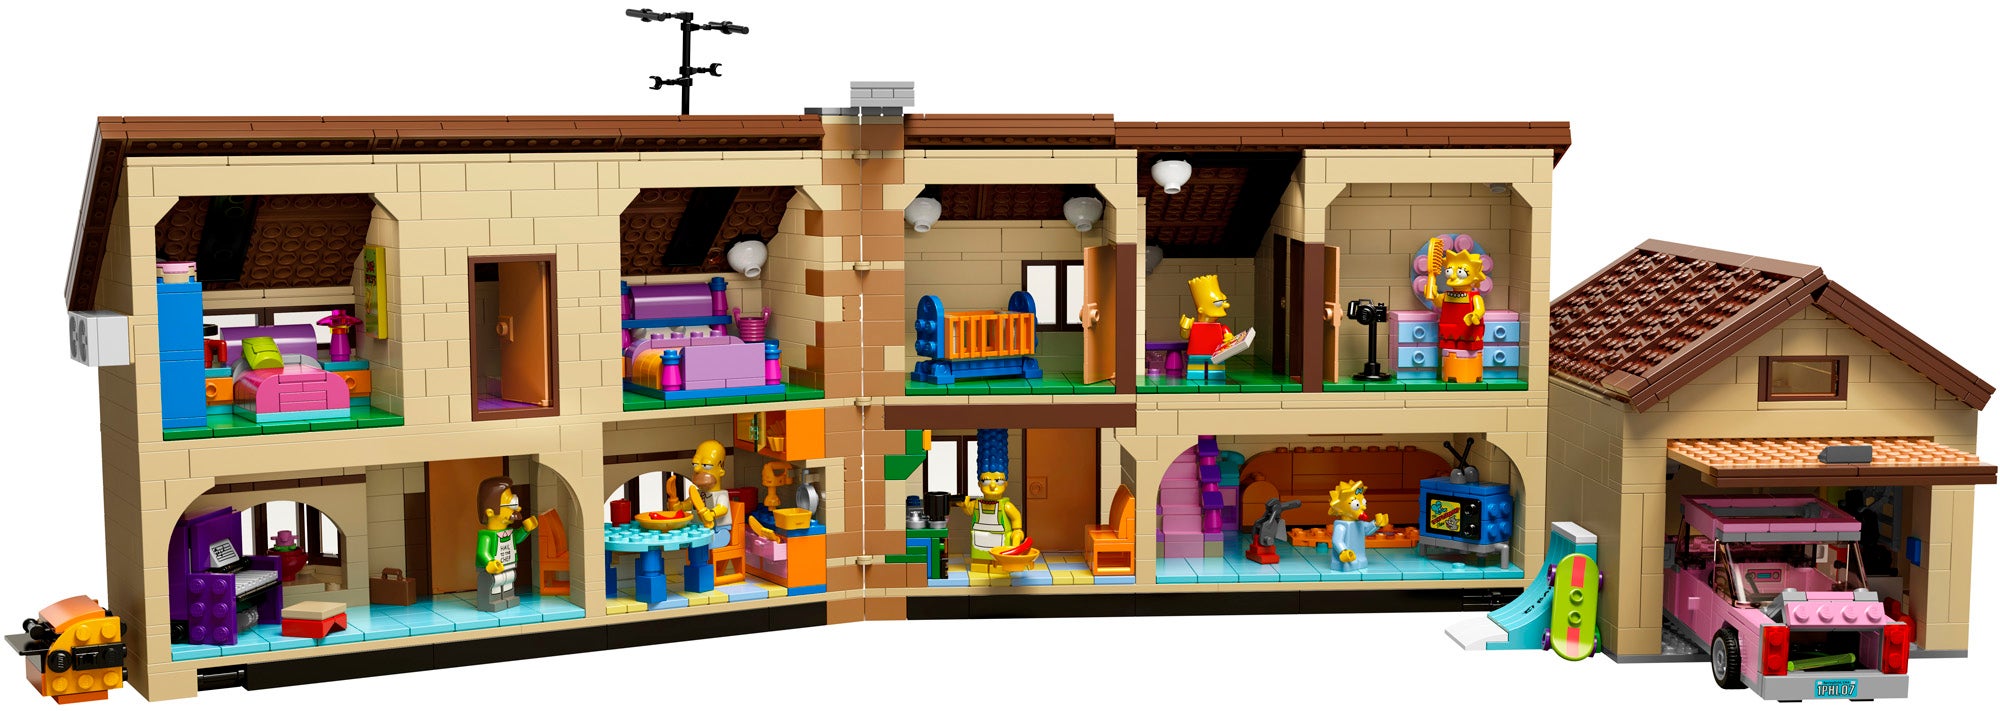 lego-simpsons-house-open.jpg